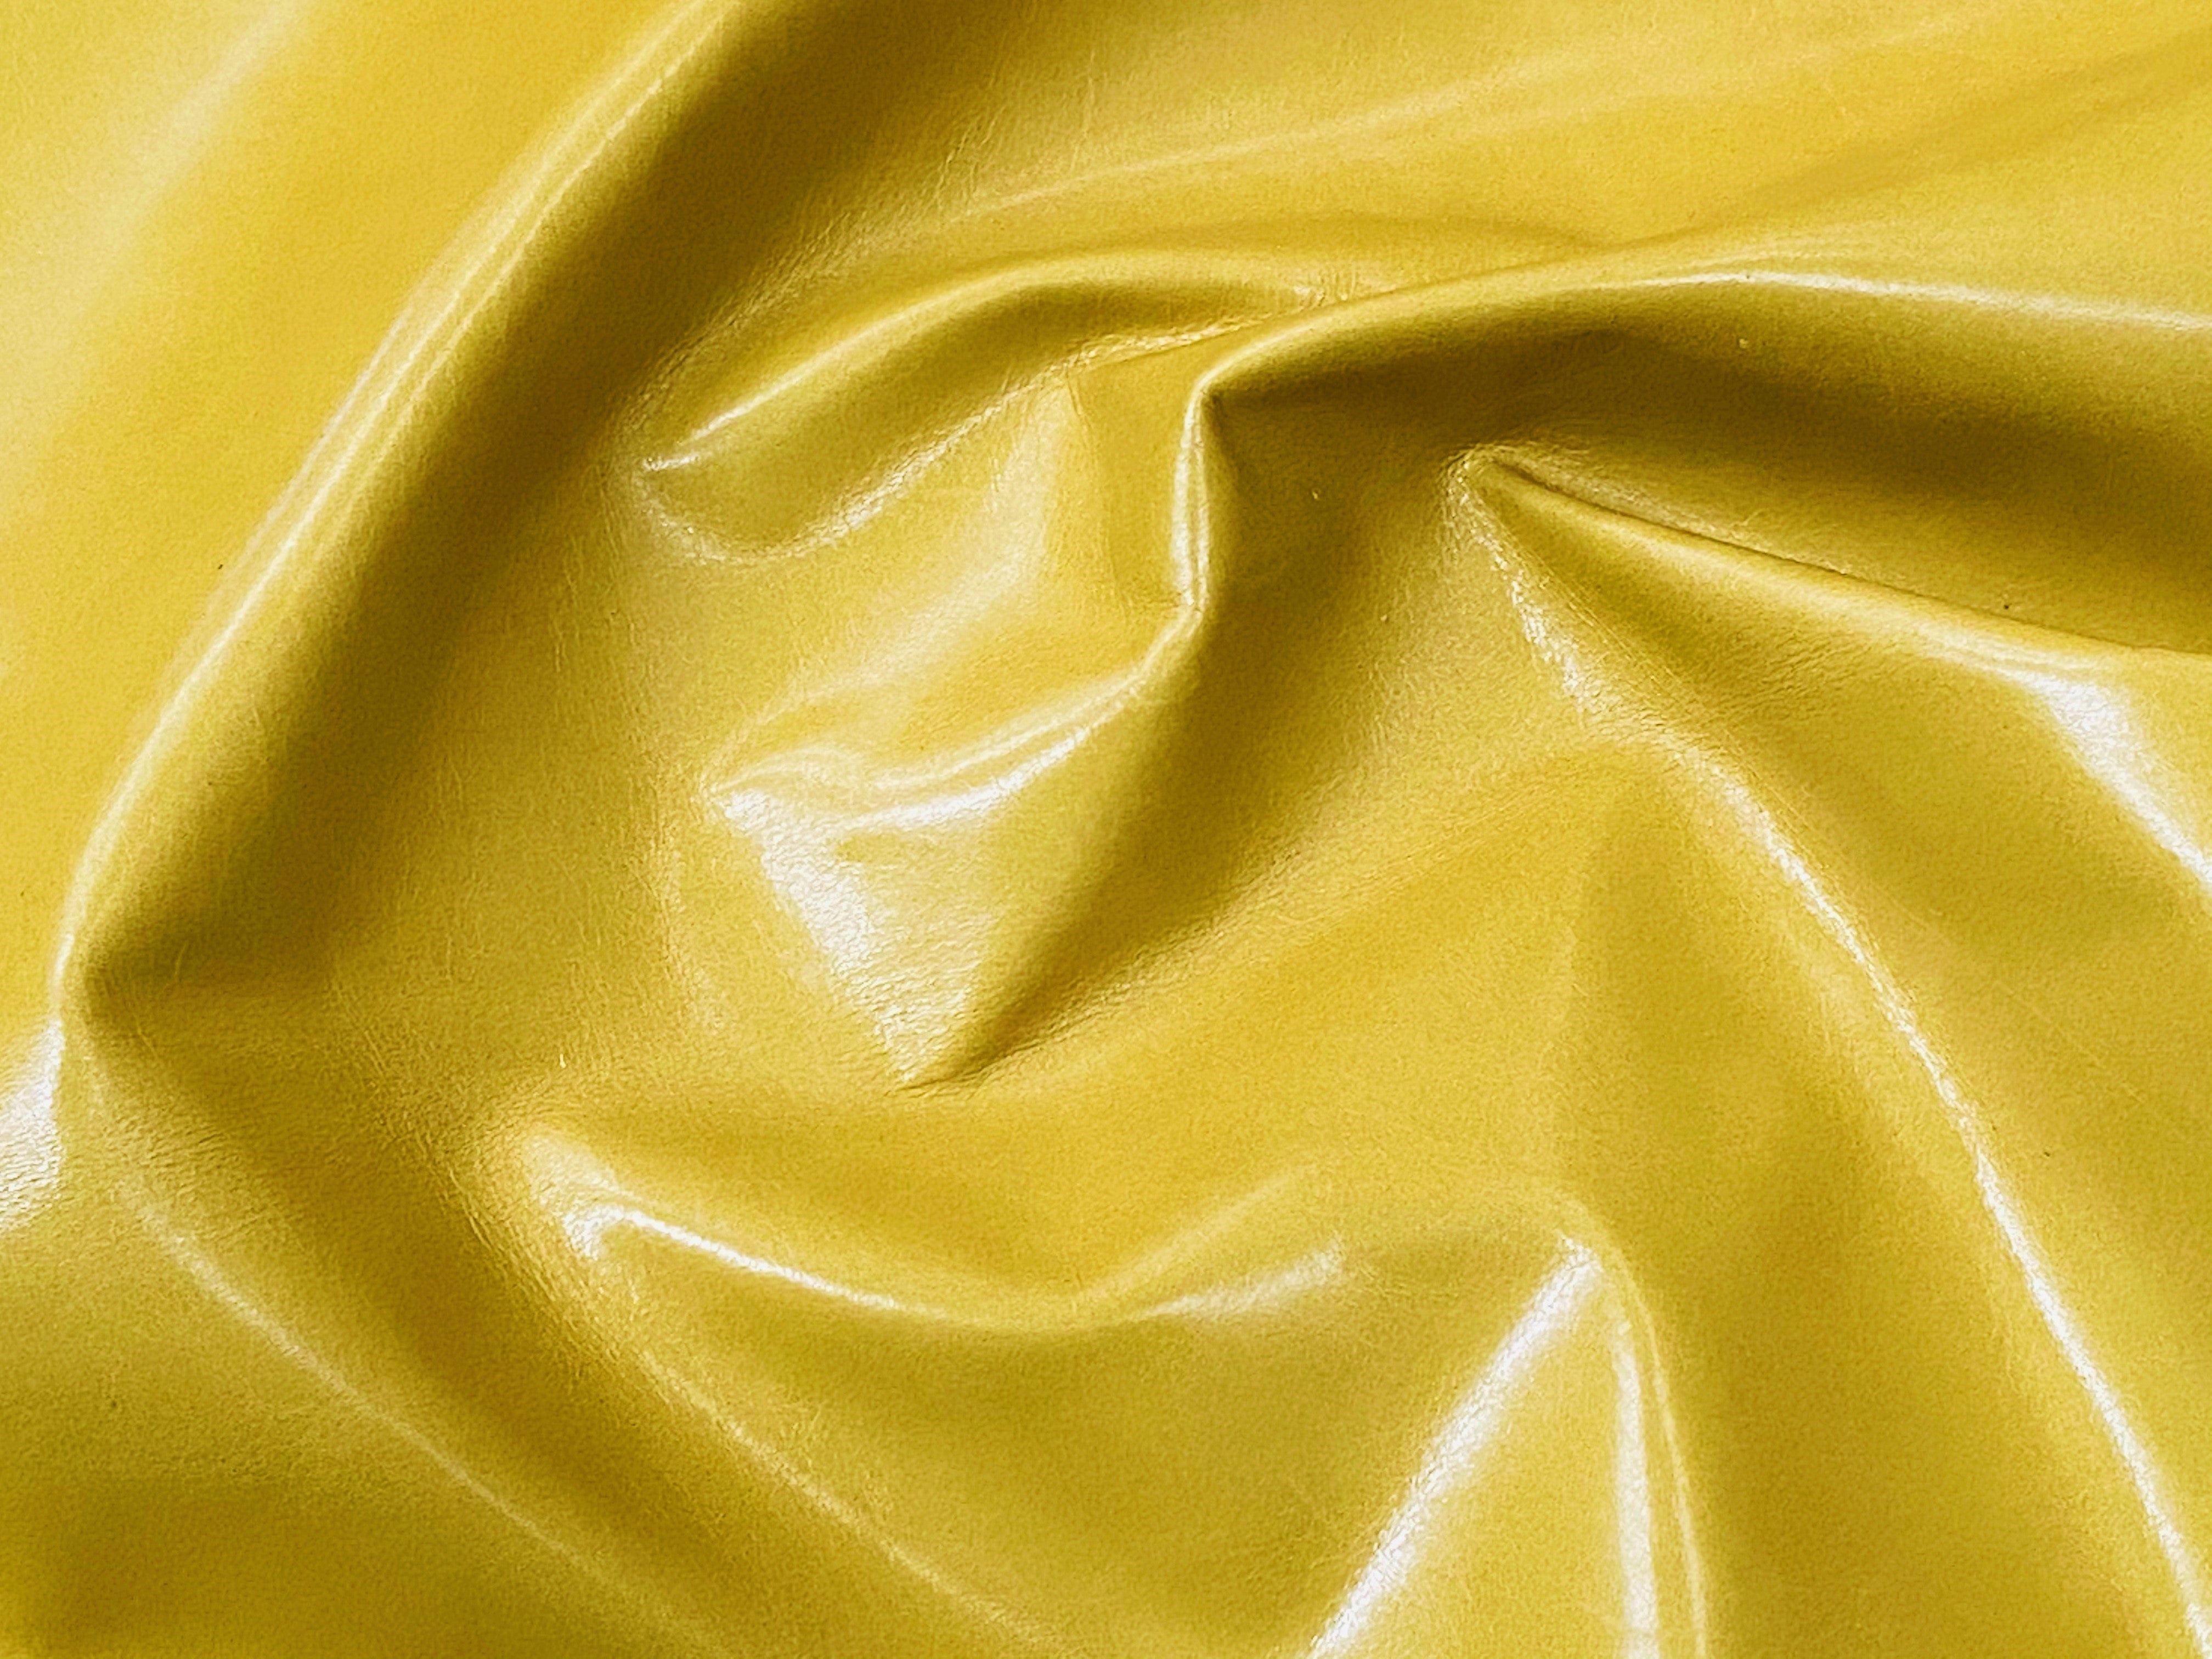 Canada Lemon, Natural Grain Glazed Leather Cow Hide :0.9-1.0mm 2.5oz) 25